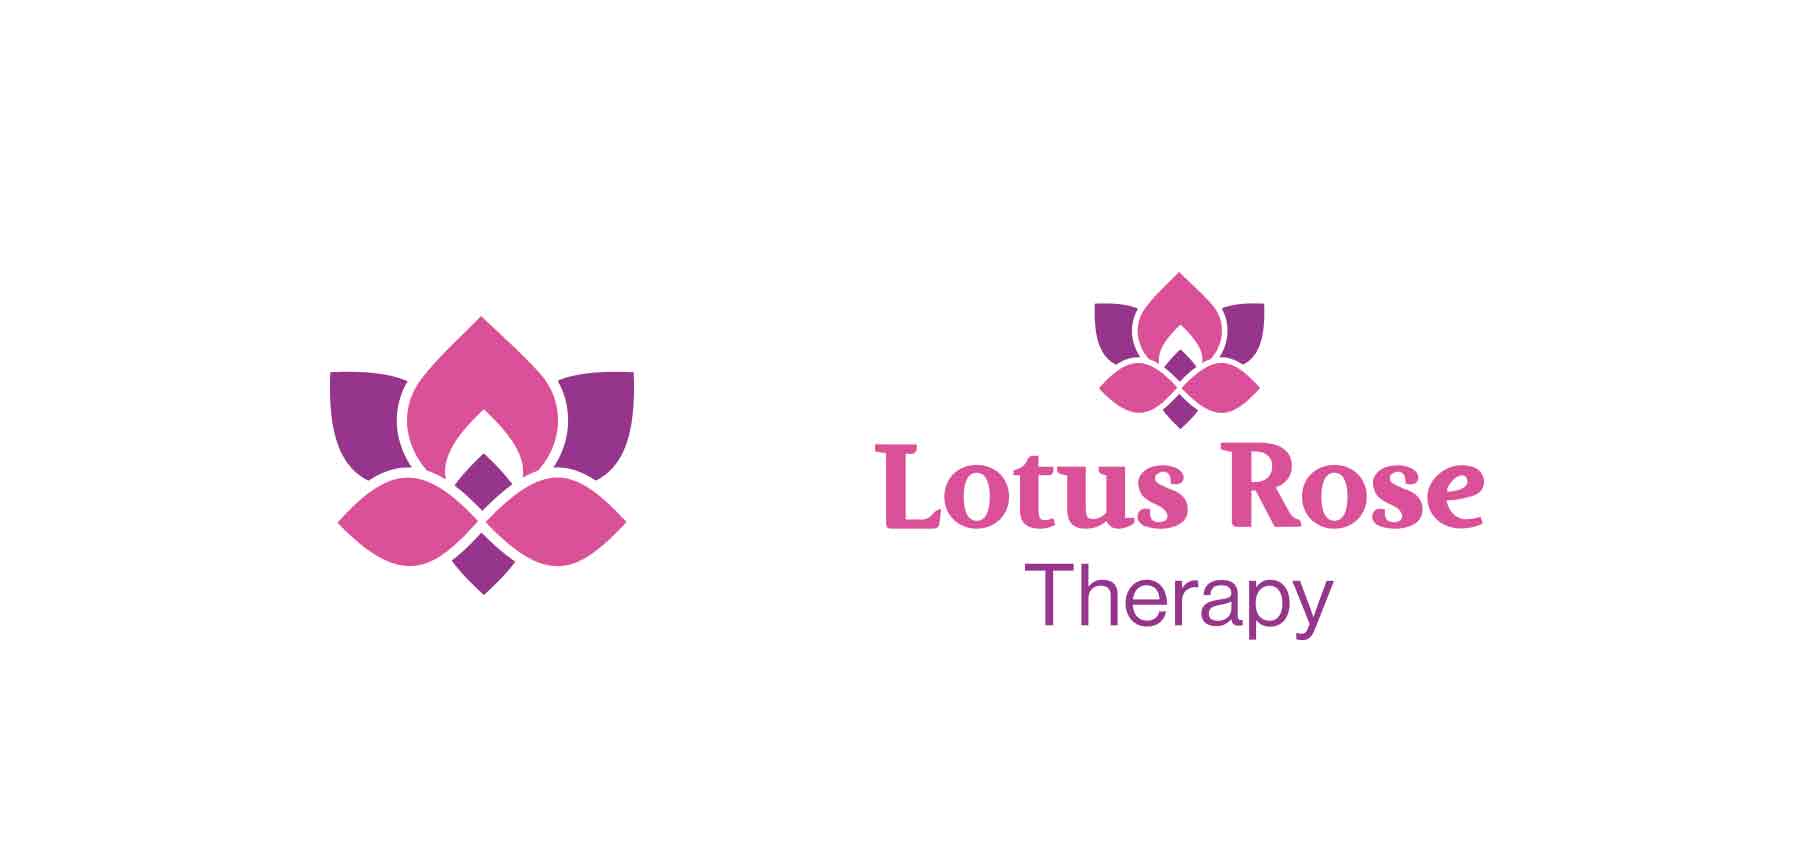 Lotus Rose Therapy branding